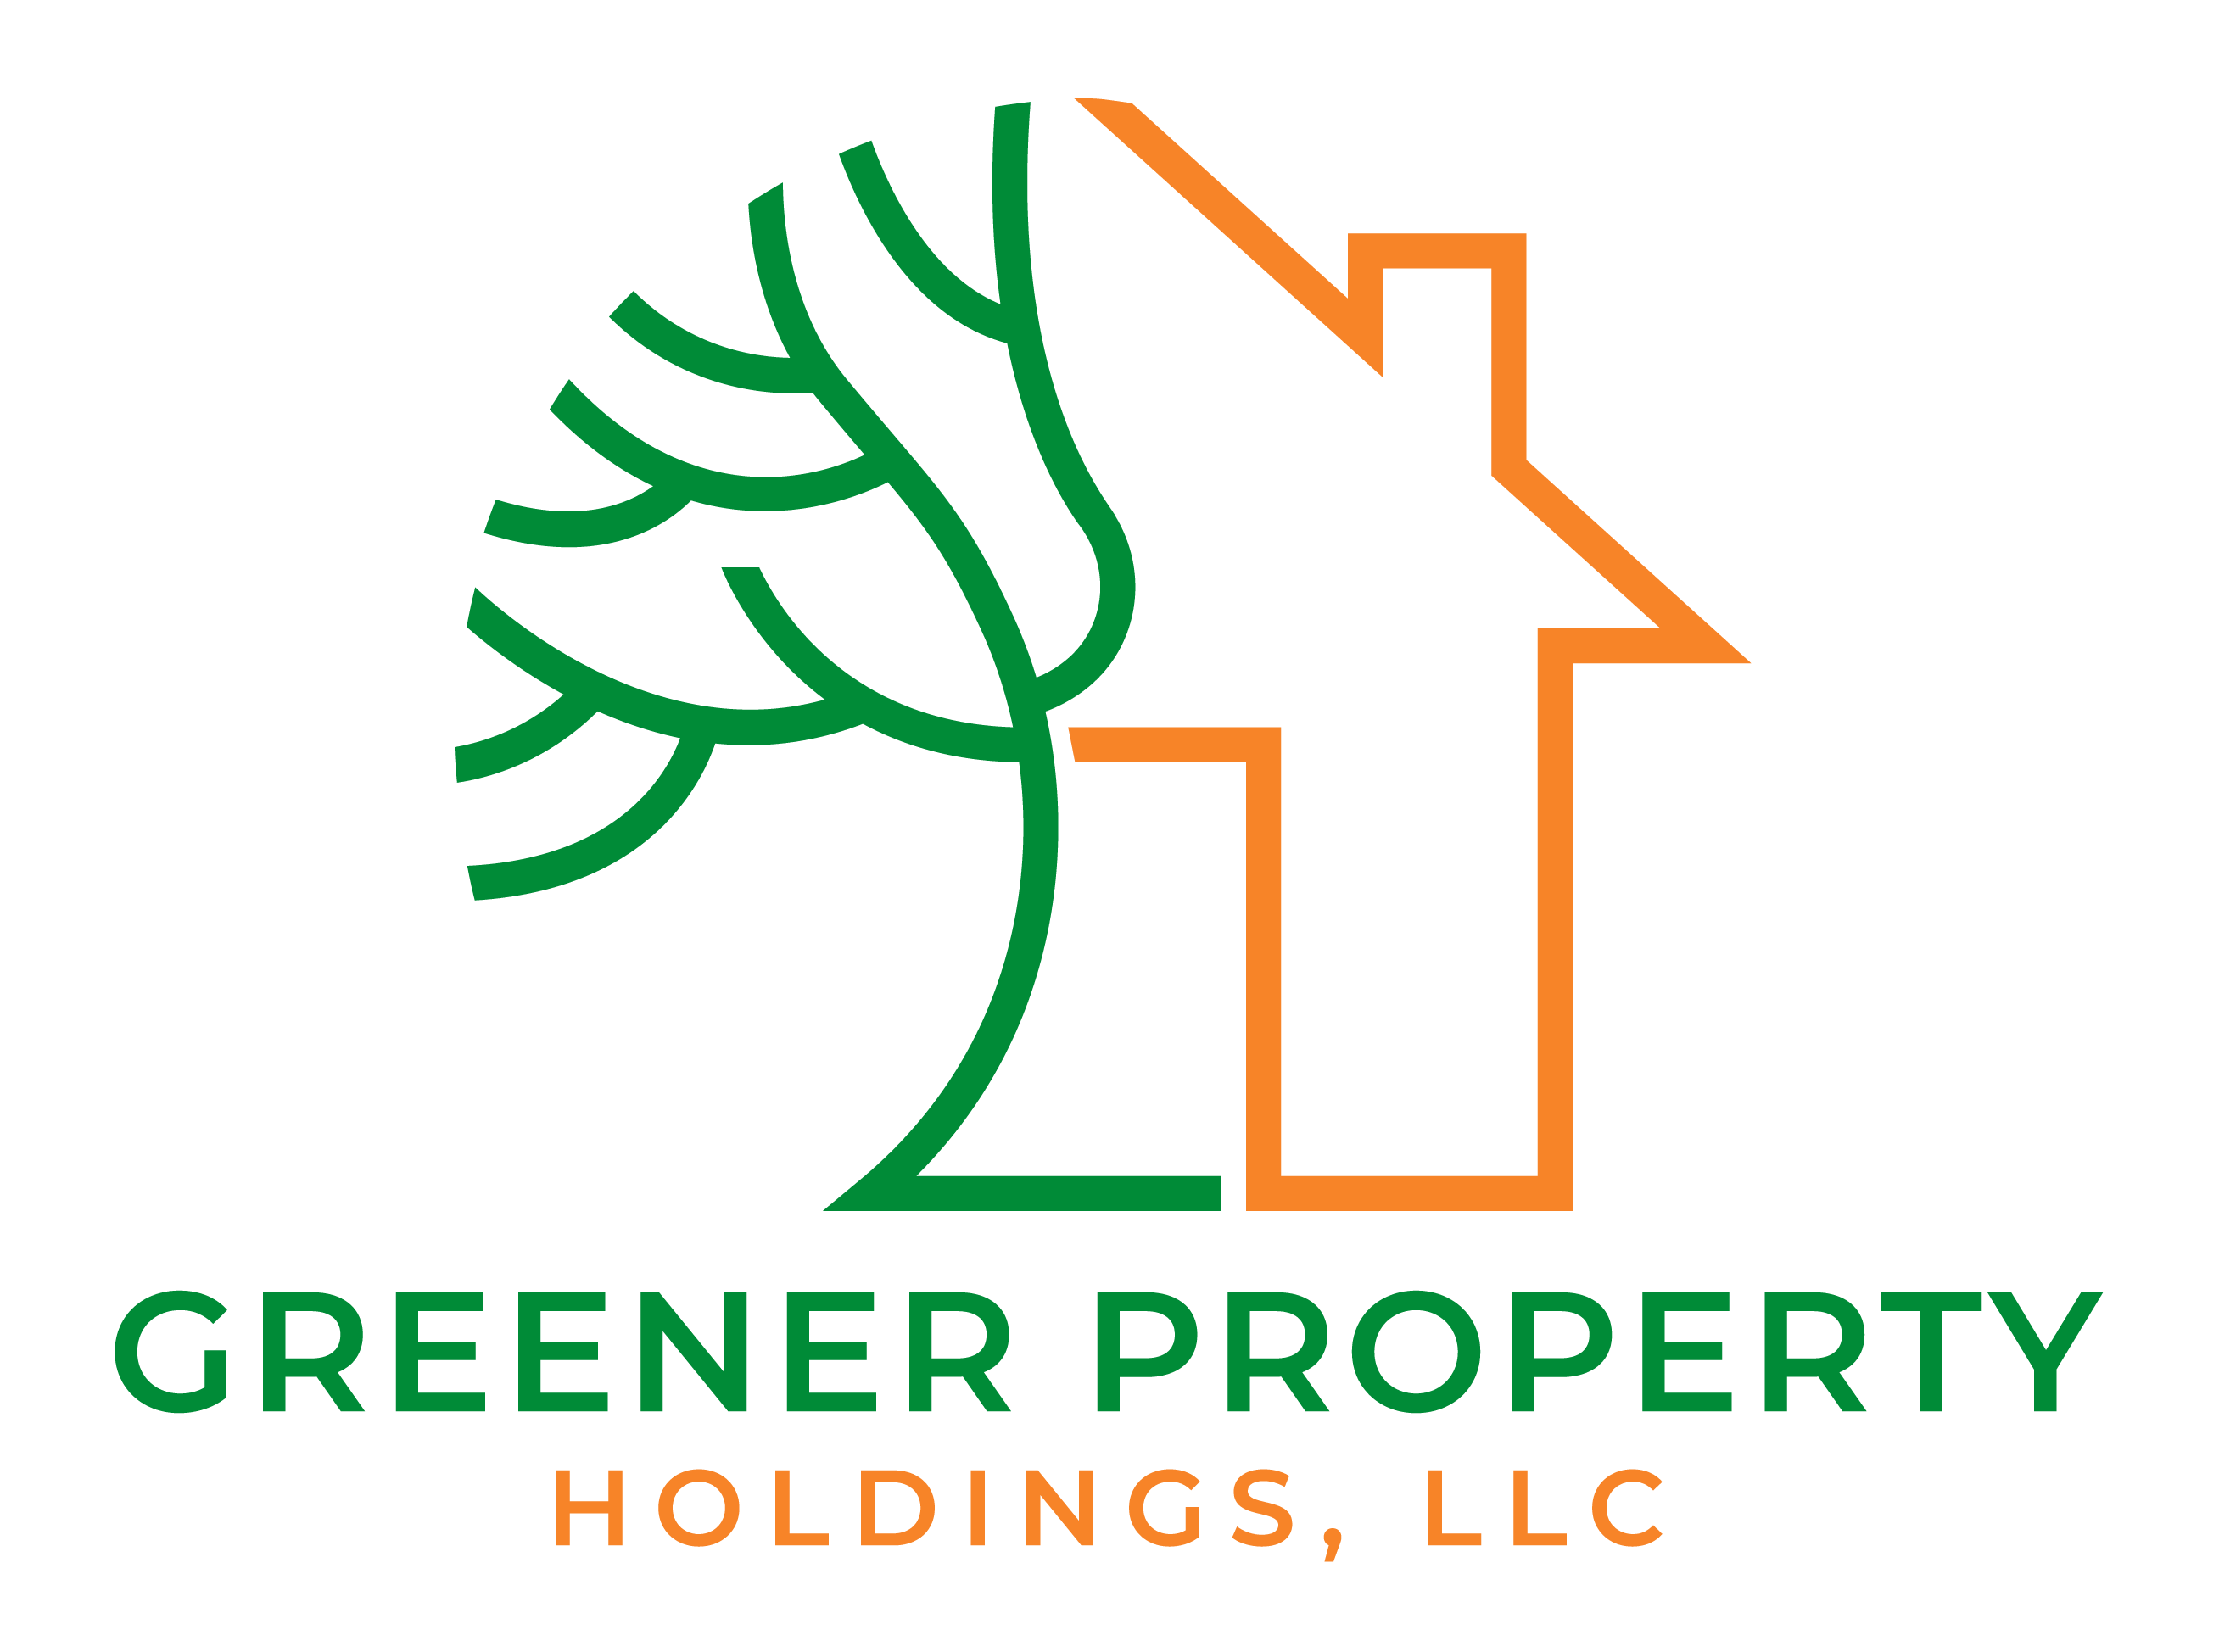 Greener Property Holdings